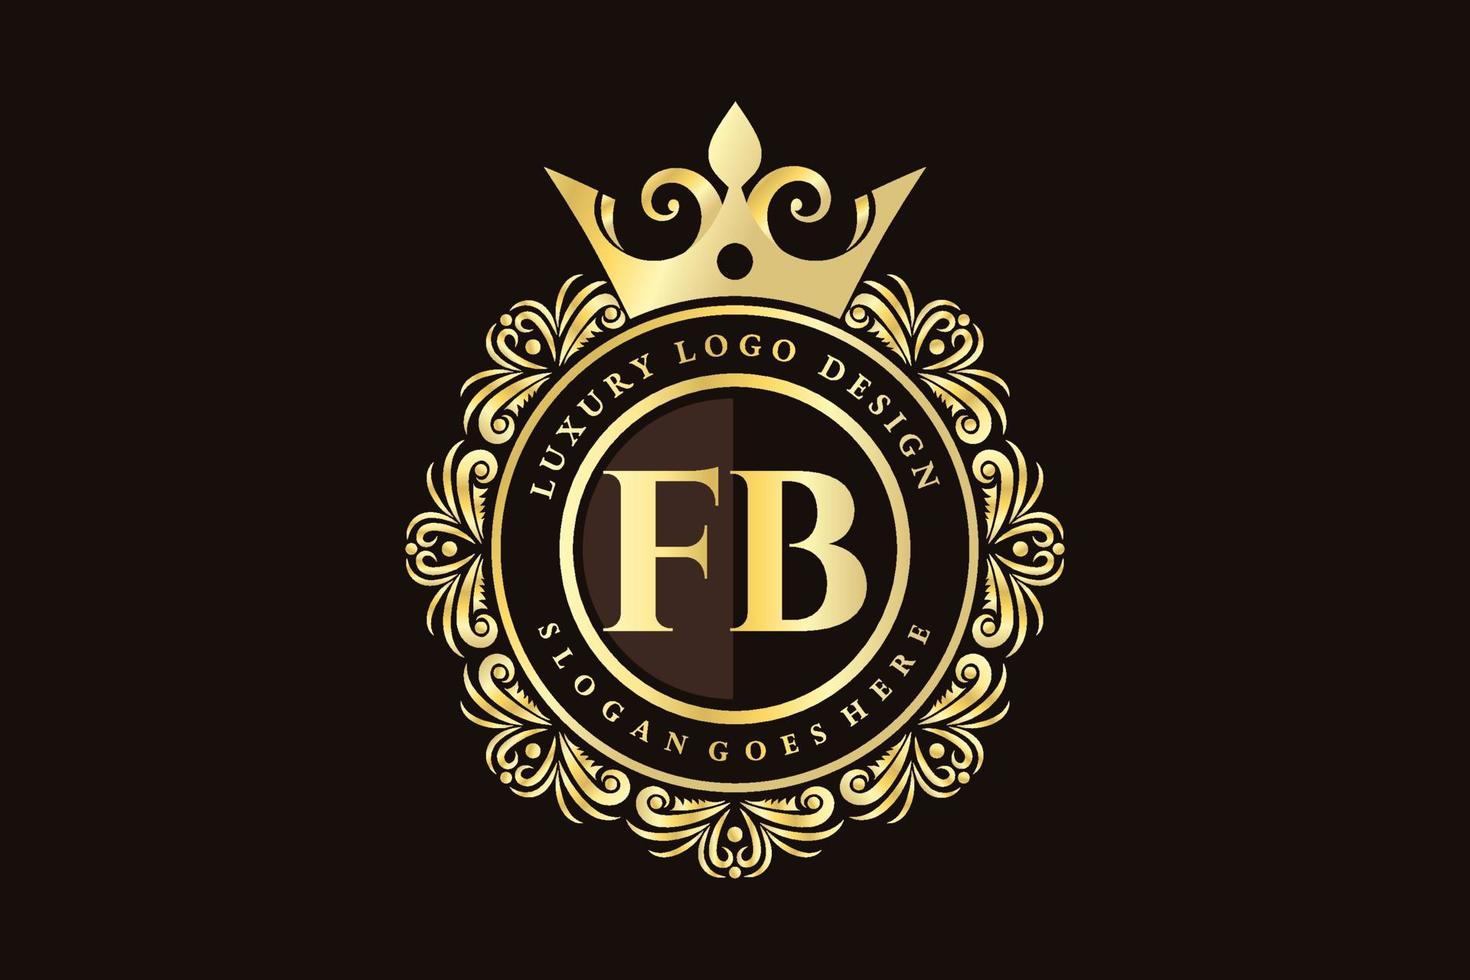 fb letra inicial ouro caligráfico feminino floral mão desenhada monograma heráldico antigo estilo vintage luxo design de logotipo vetor premium